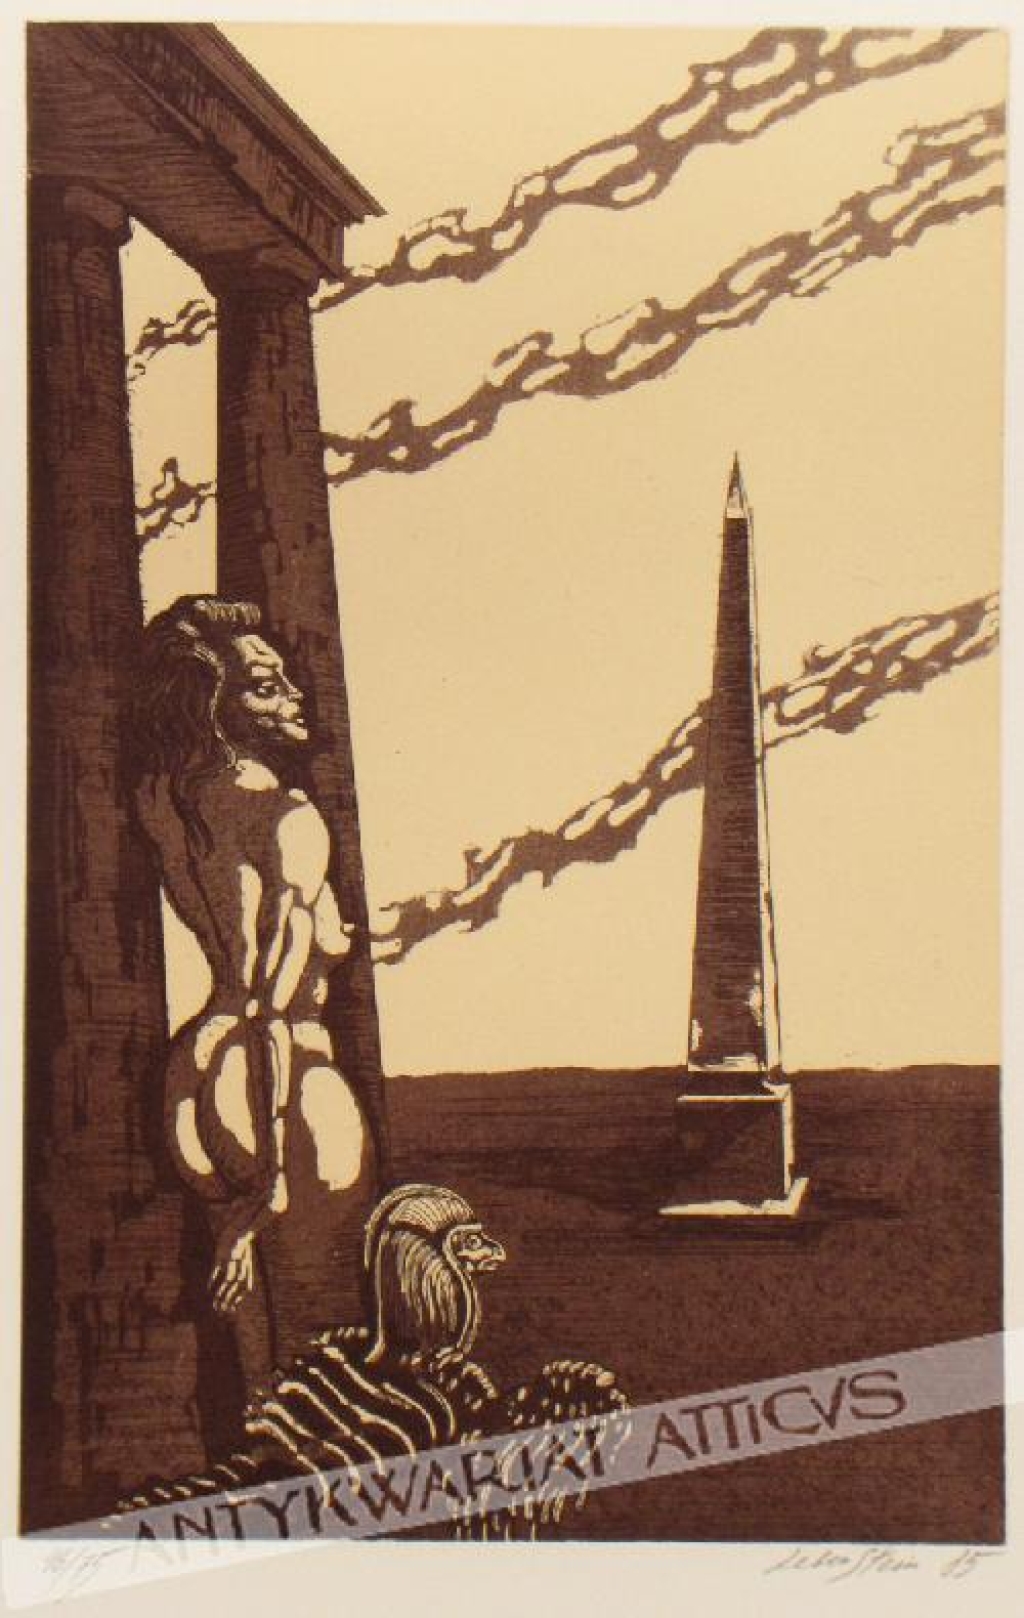 [akwaforta, 1985] Kobieta, sfinks i obelisk
